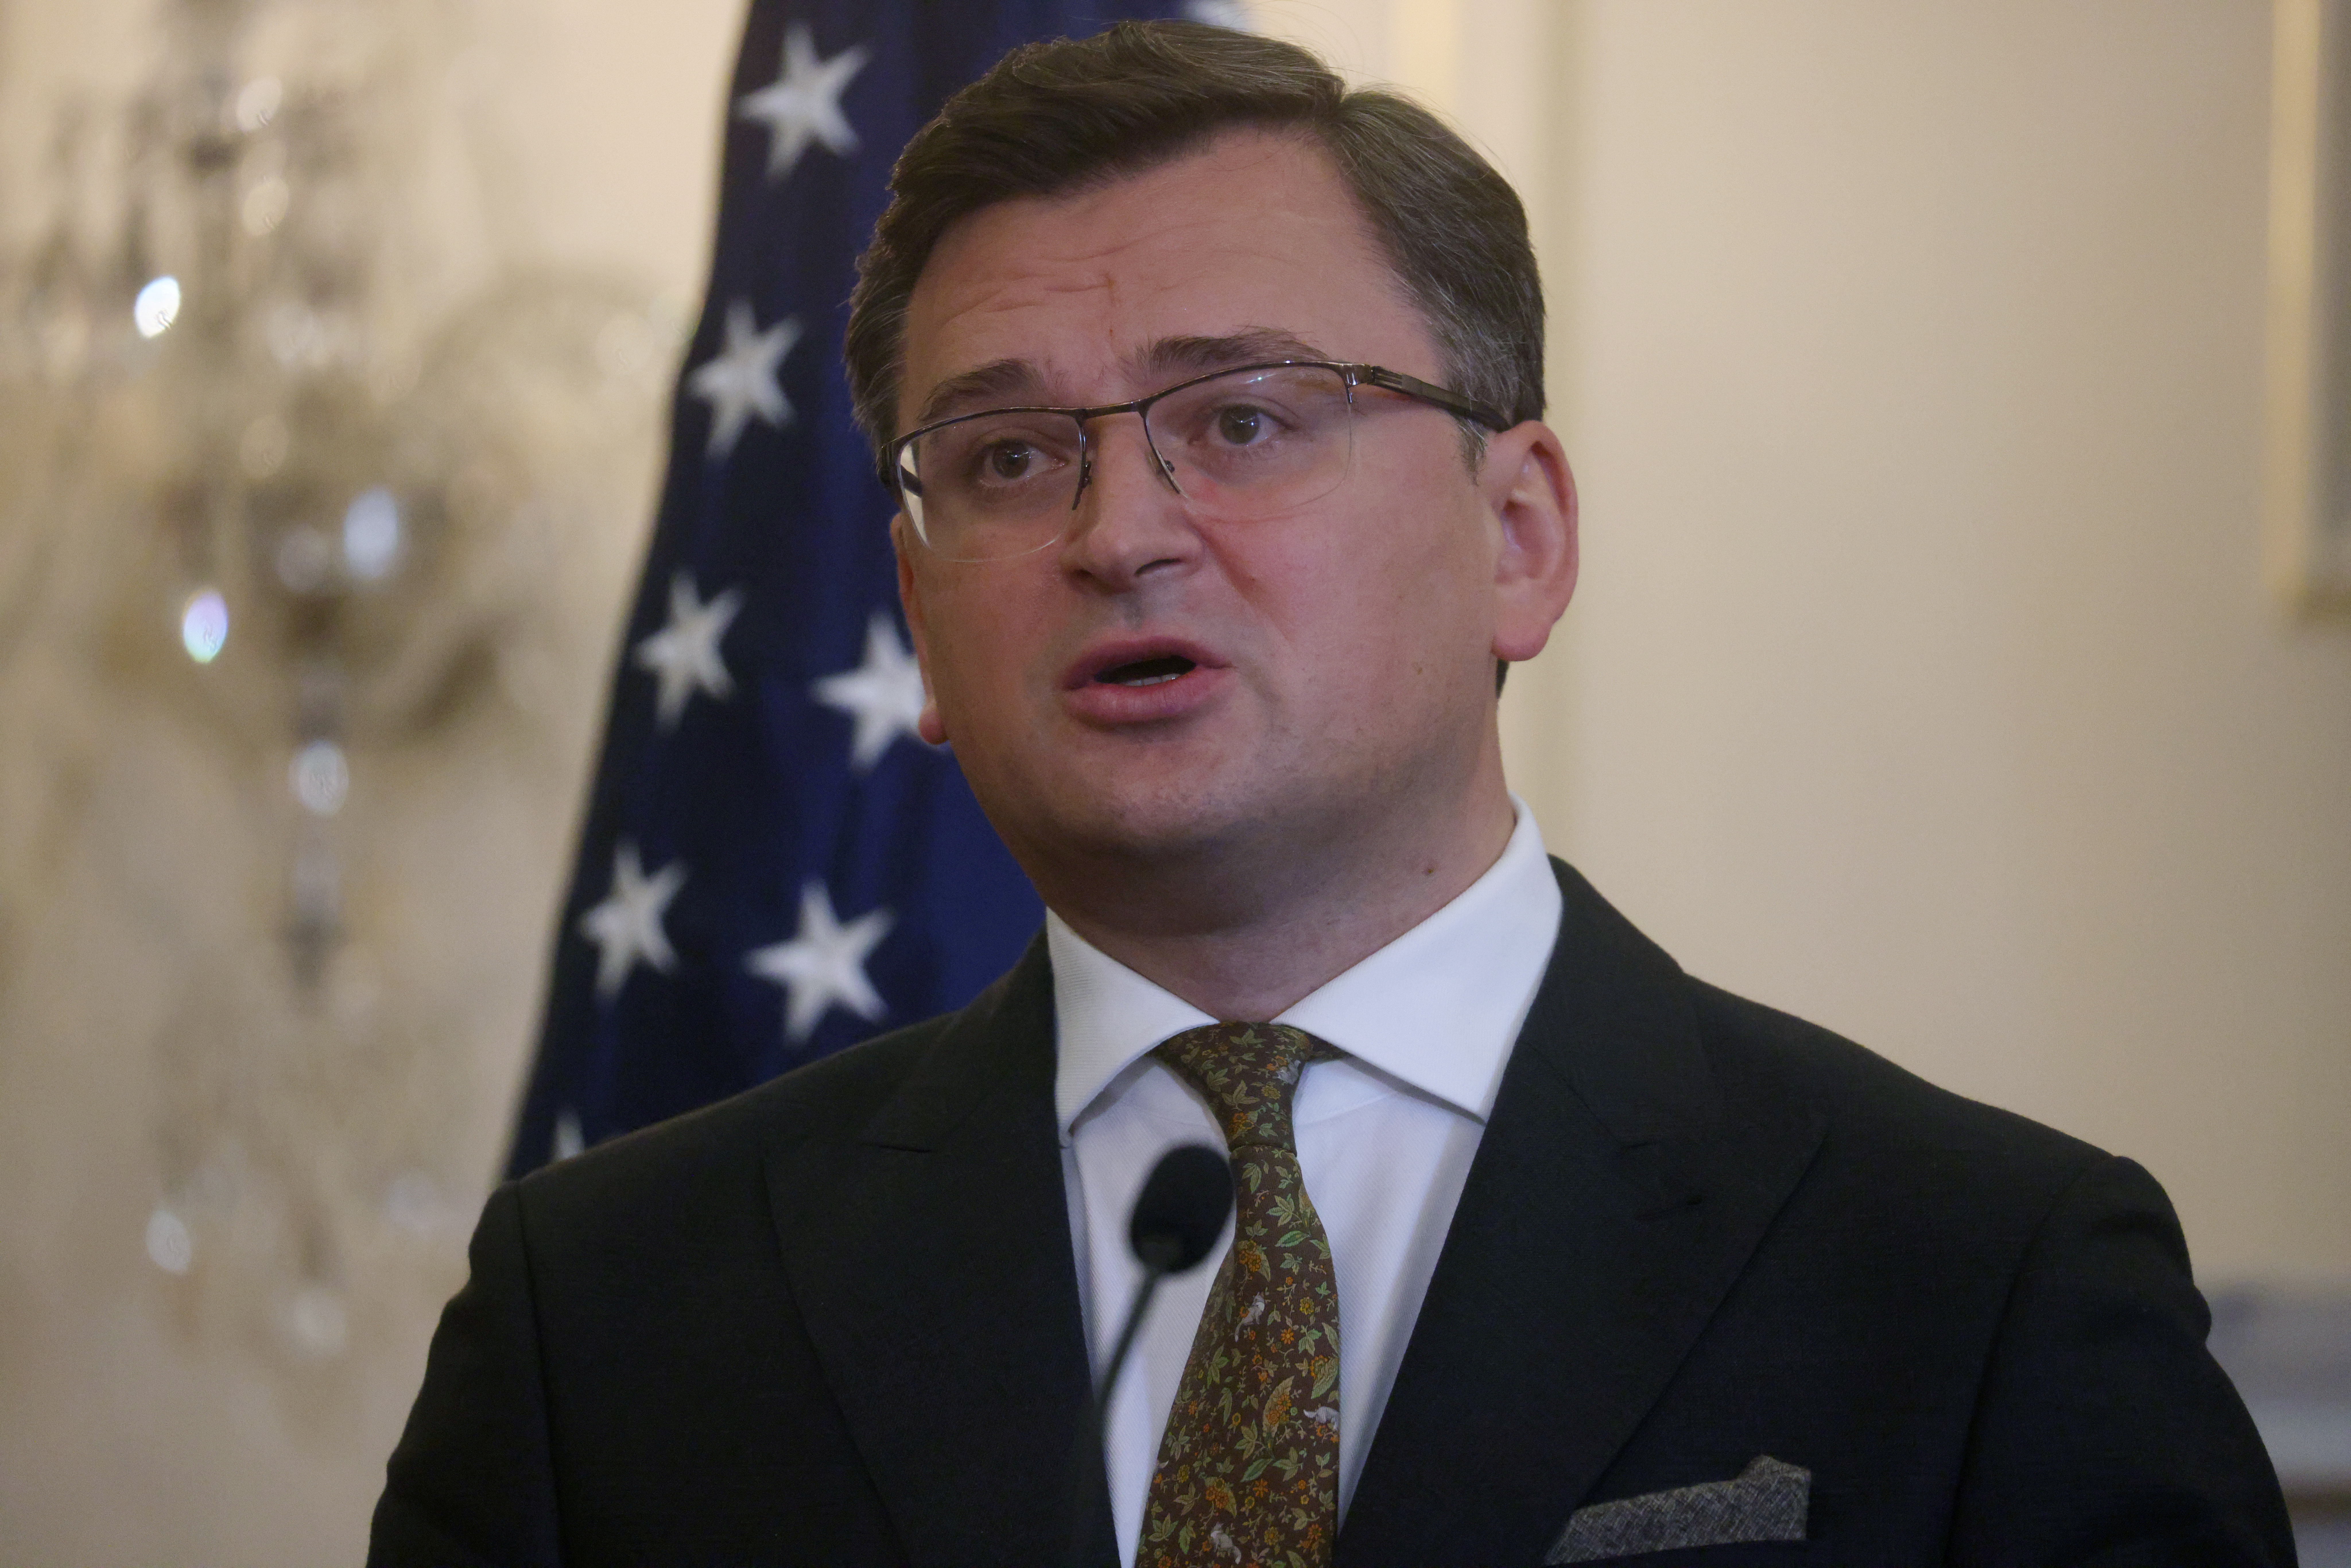 U.S. Secretary of State Antony Blinken and Ukraine's Foreign Minister Dmytro Kuleba hold a news conference